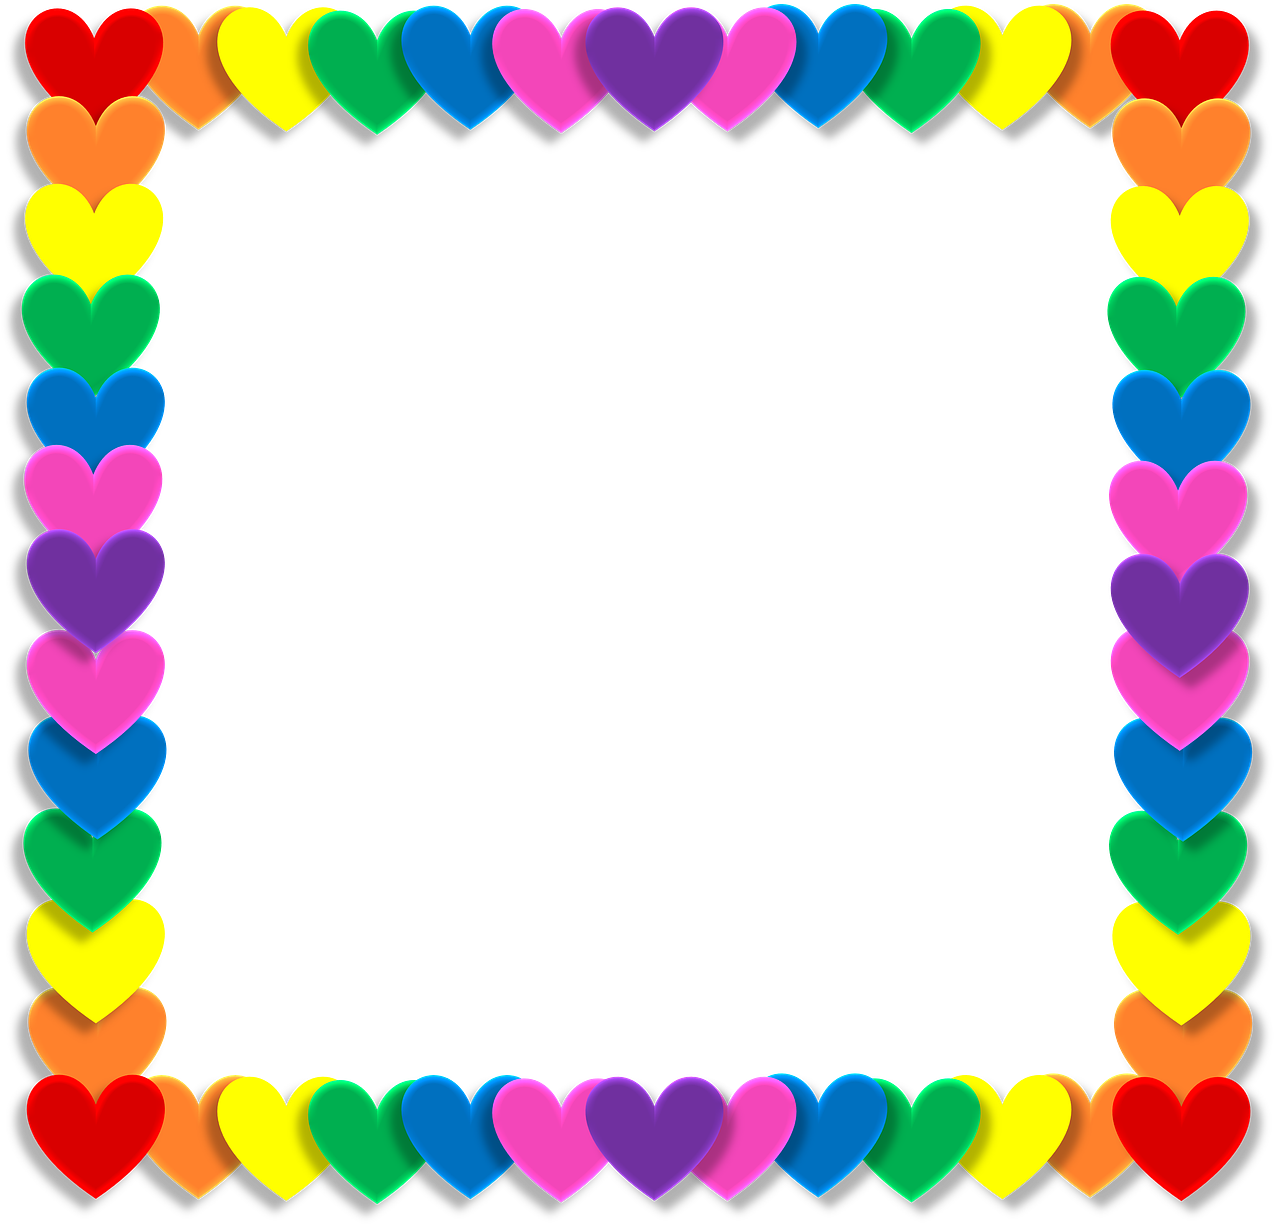 A Rainbow Colored Heart Shaped Frame